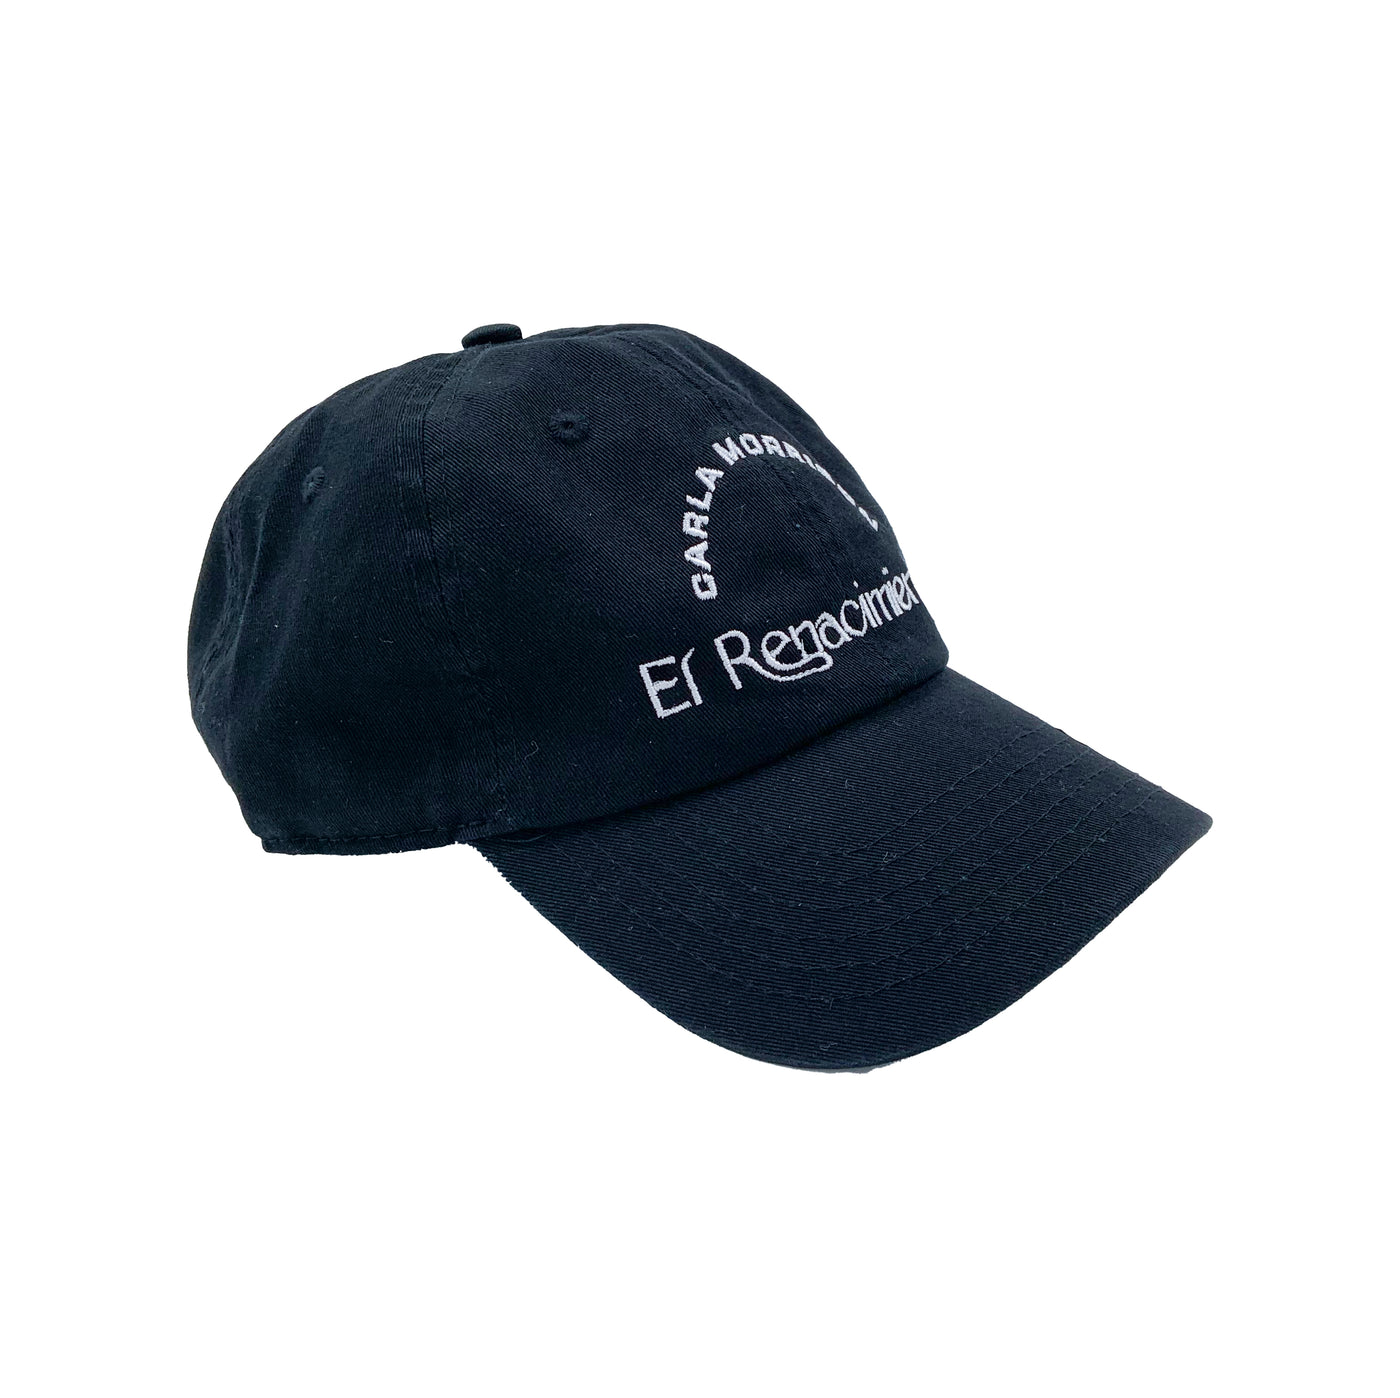 Black hat with Carla Morrison logo